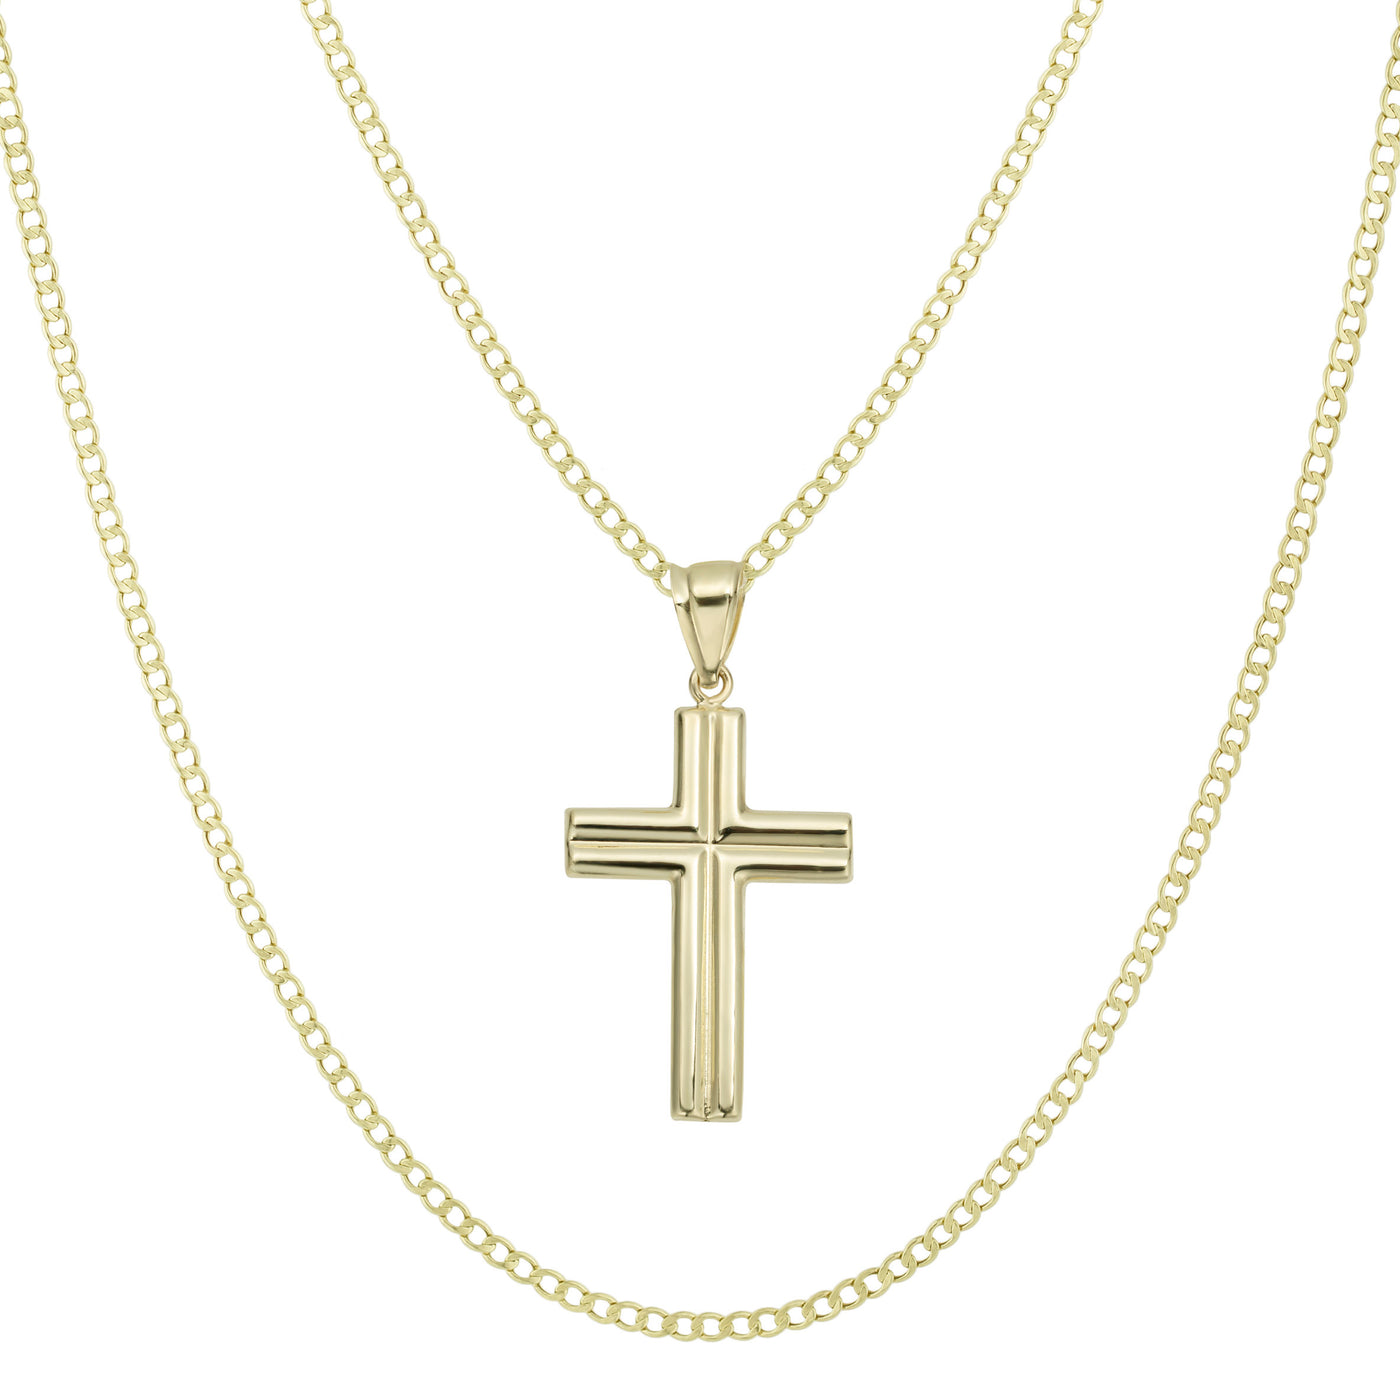 1 3/4" Jesus Crucifix Cross Pendant & Chain Necklace Set 10K Yellow White Gold